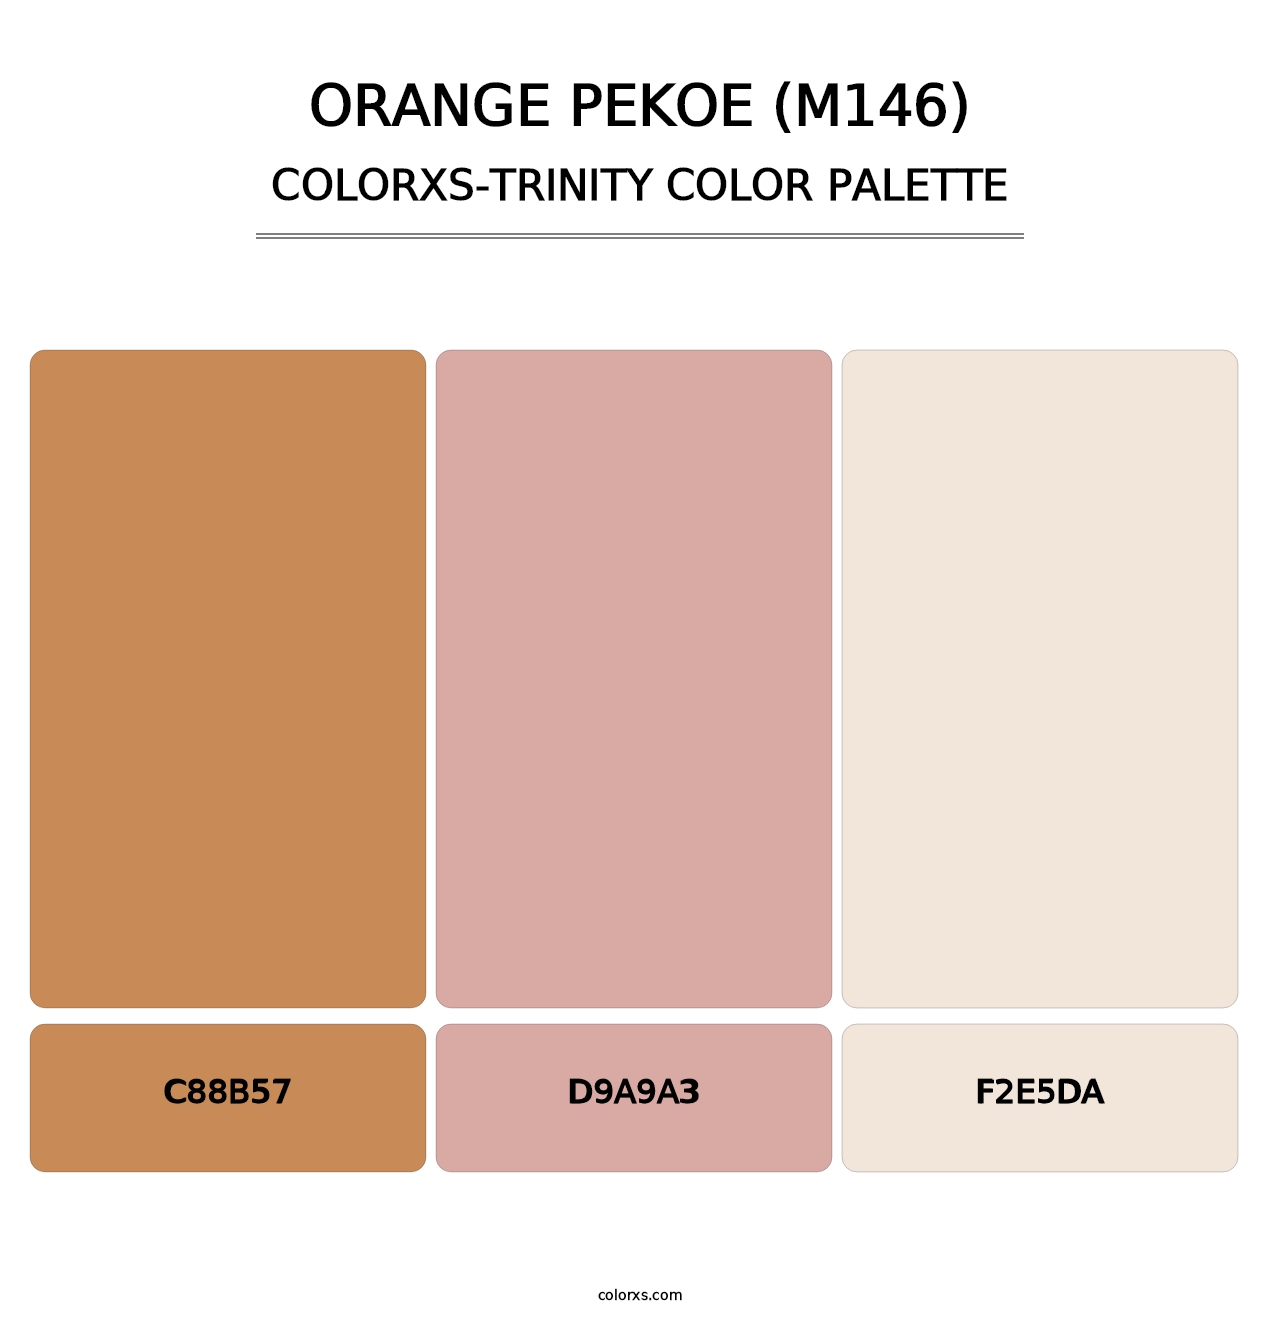 Orange Pekoe (M146) - Colorxs Trinity Palette